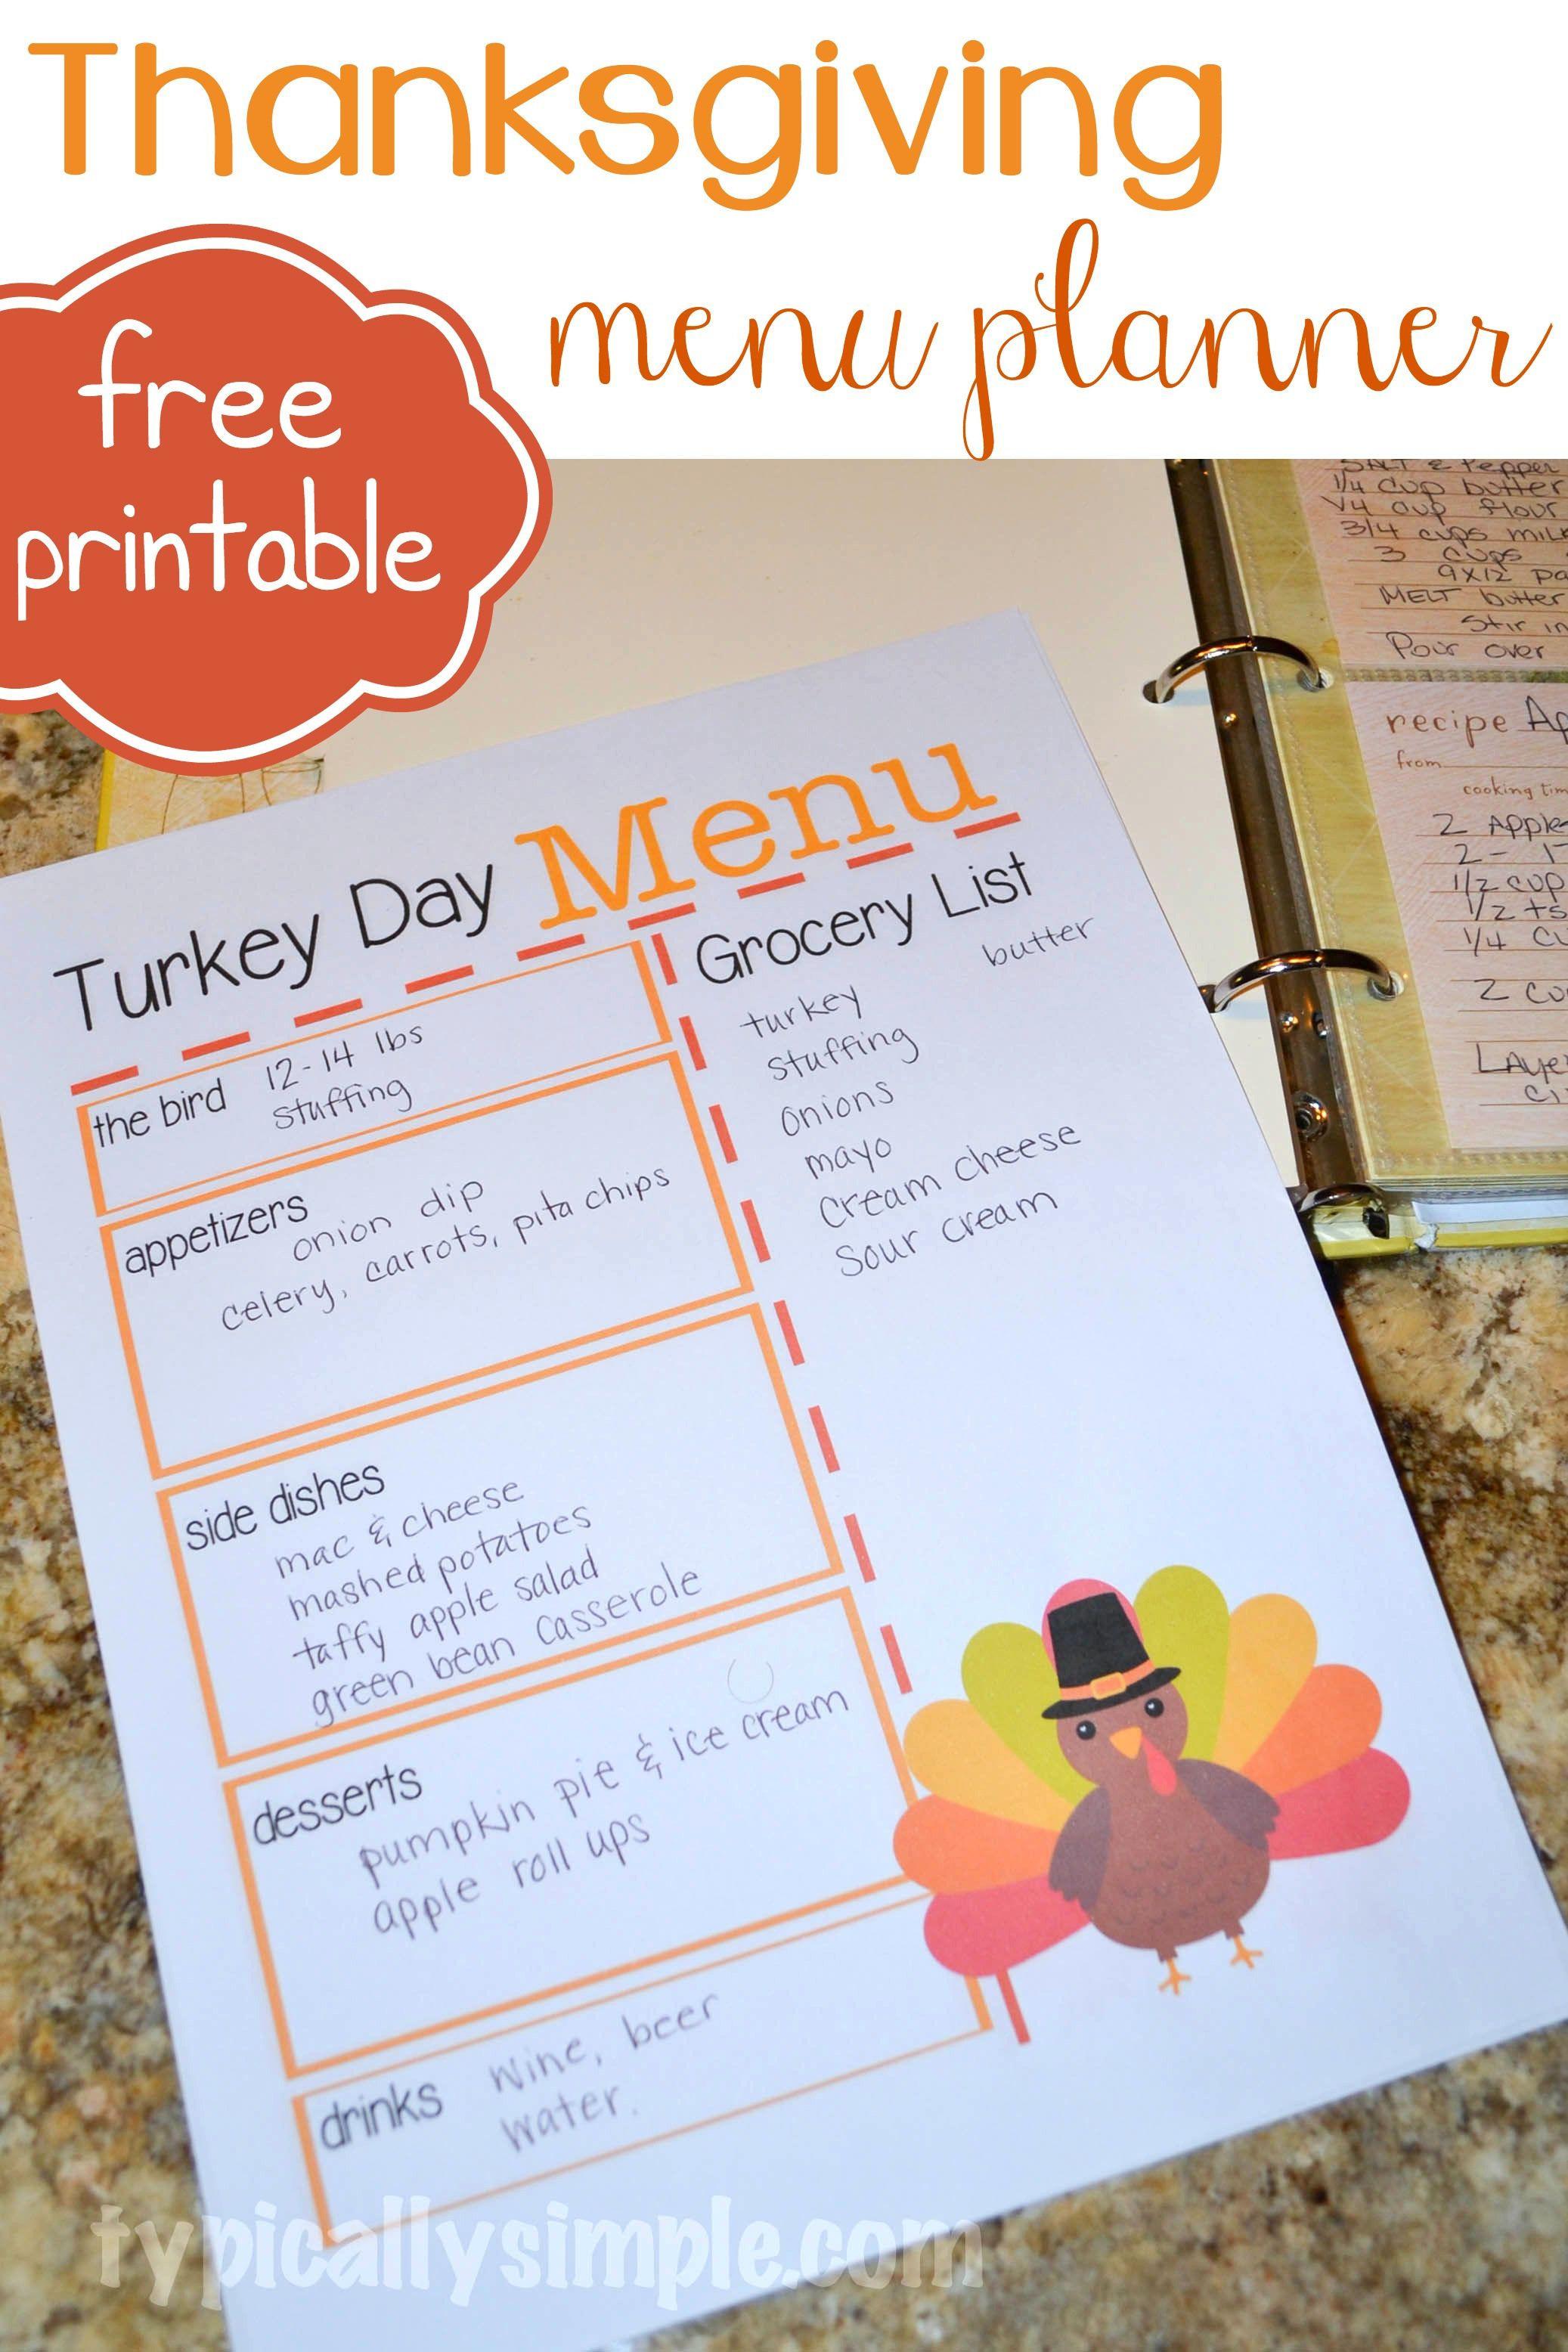 Traditional Thanksgiving Dinner Menu List
 Turkey Day Menu Planner Typically Simple